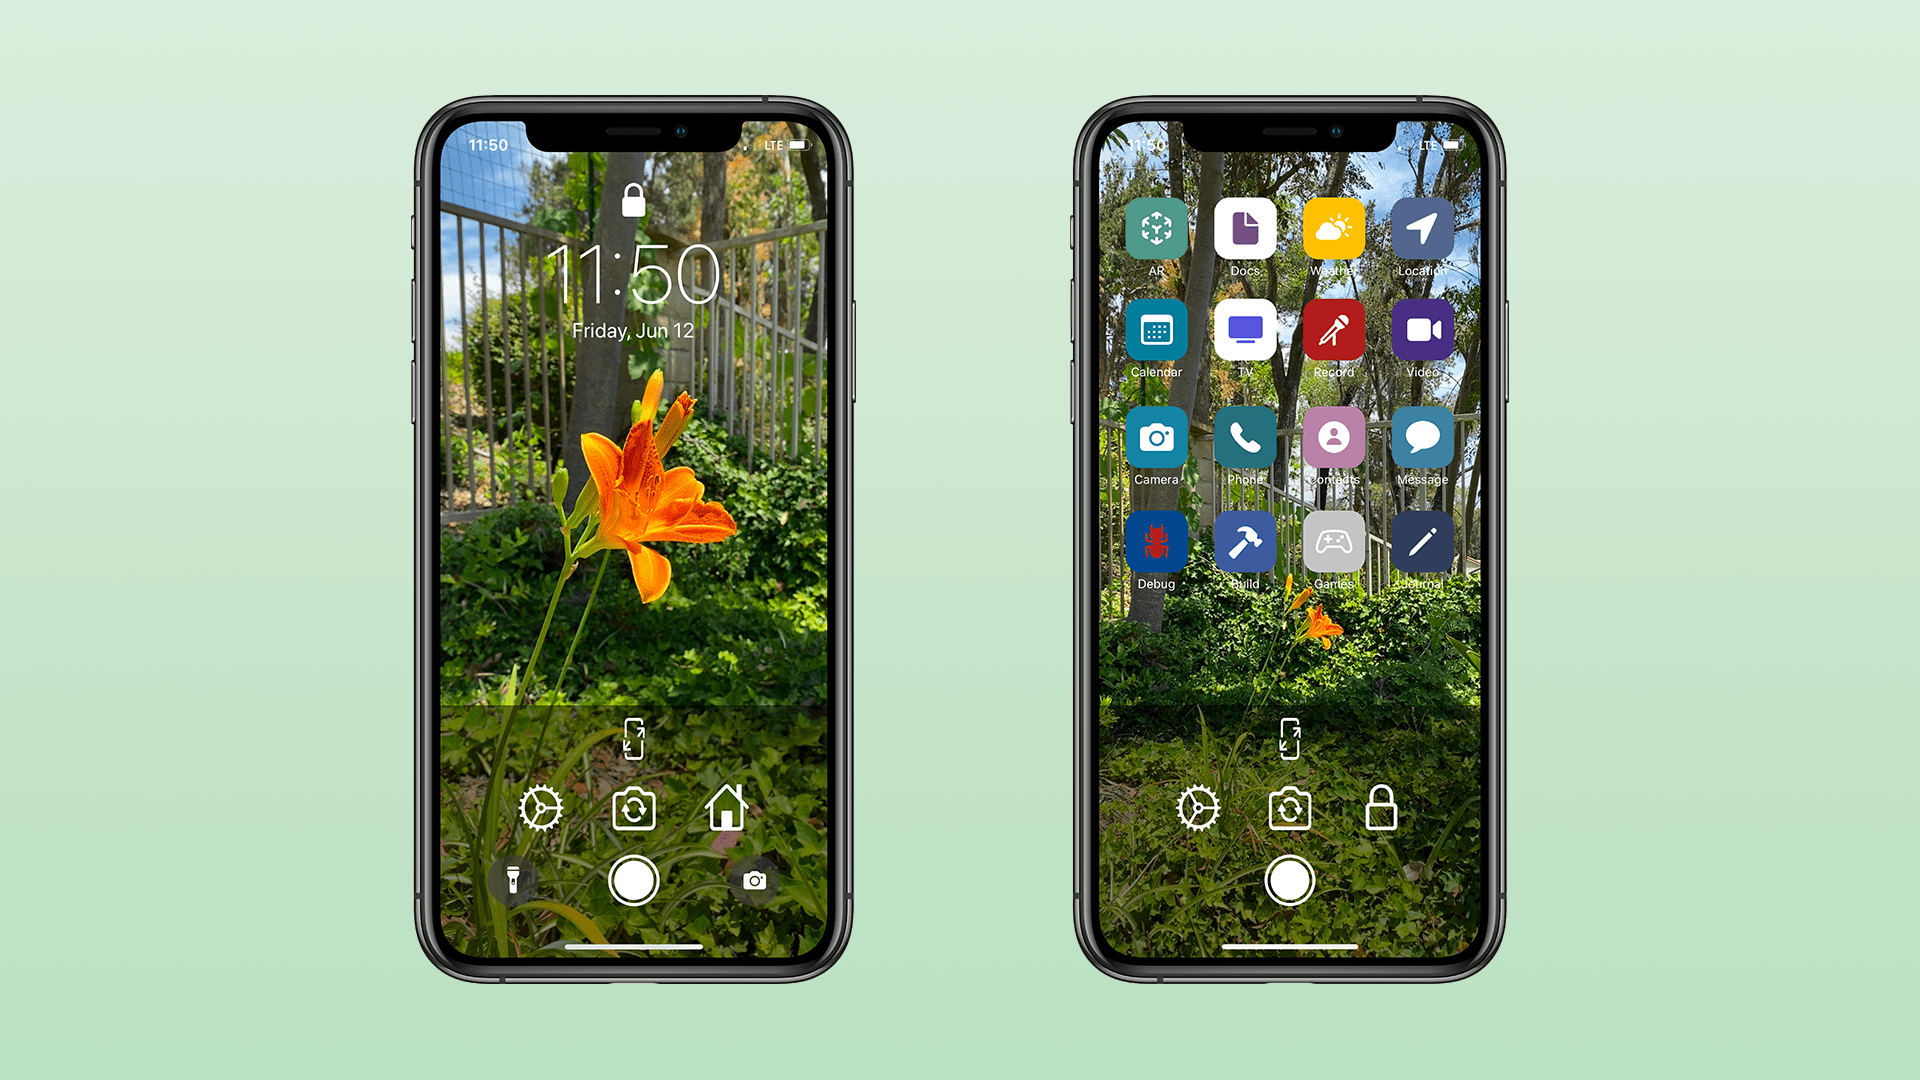 App Store 21 يونيو 2020 Lockne: يمكنك بسهولة إنشاء خلفيات iPhone المثالية بنفسك